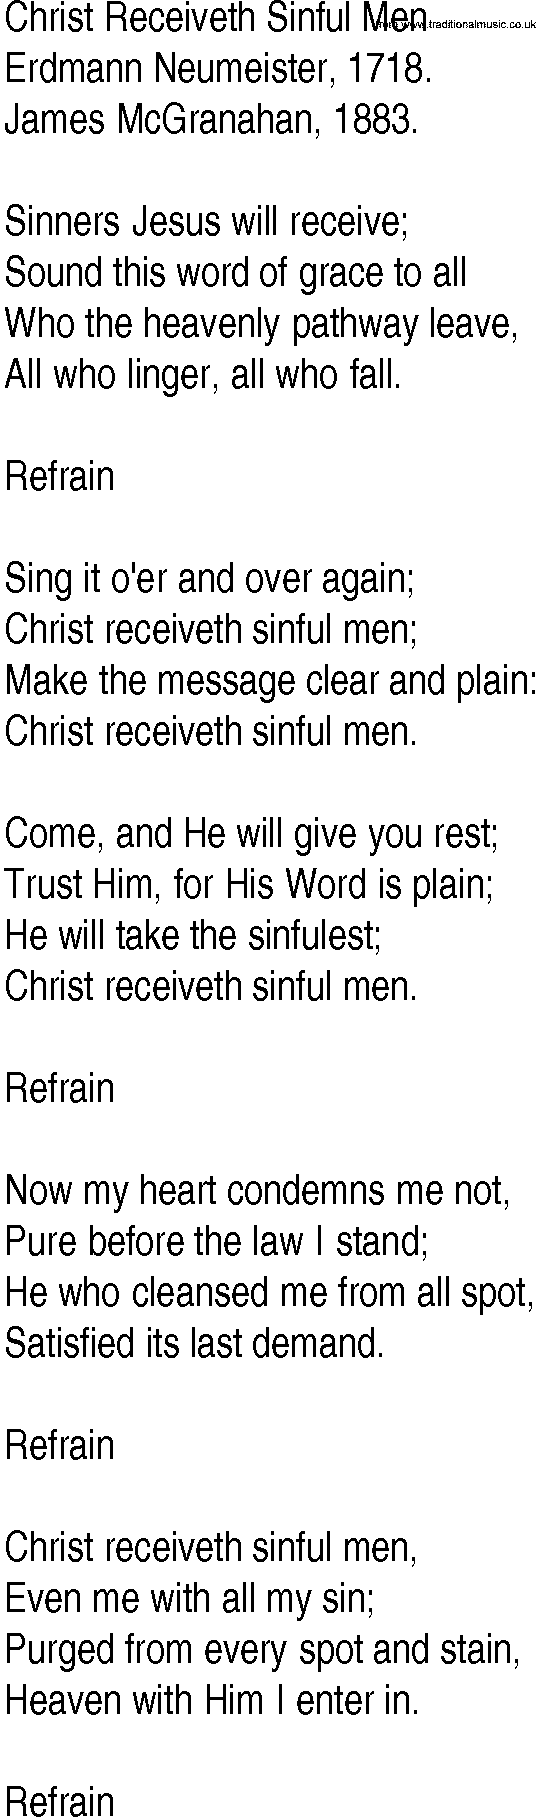 Hymn and Gospel Song: Christ Receiveth Sinful Men by Erdmann Neumeister lyrics